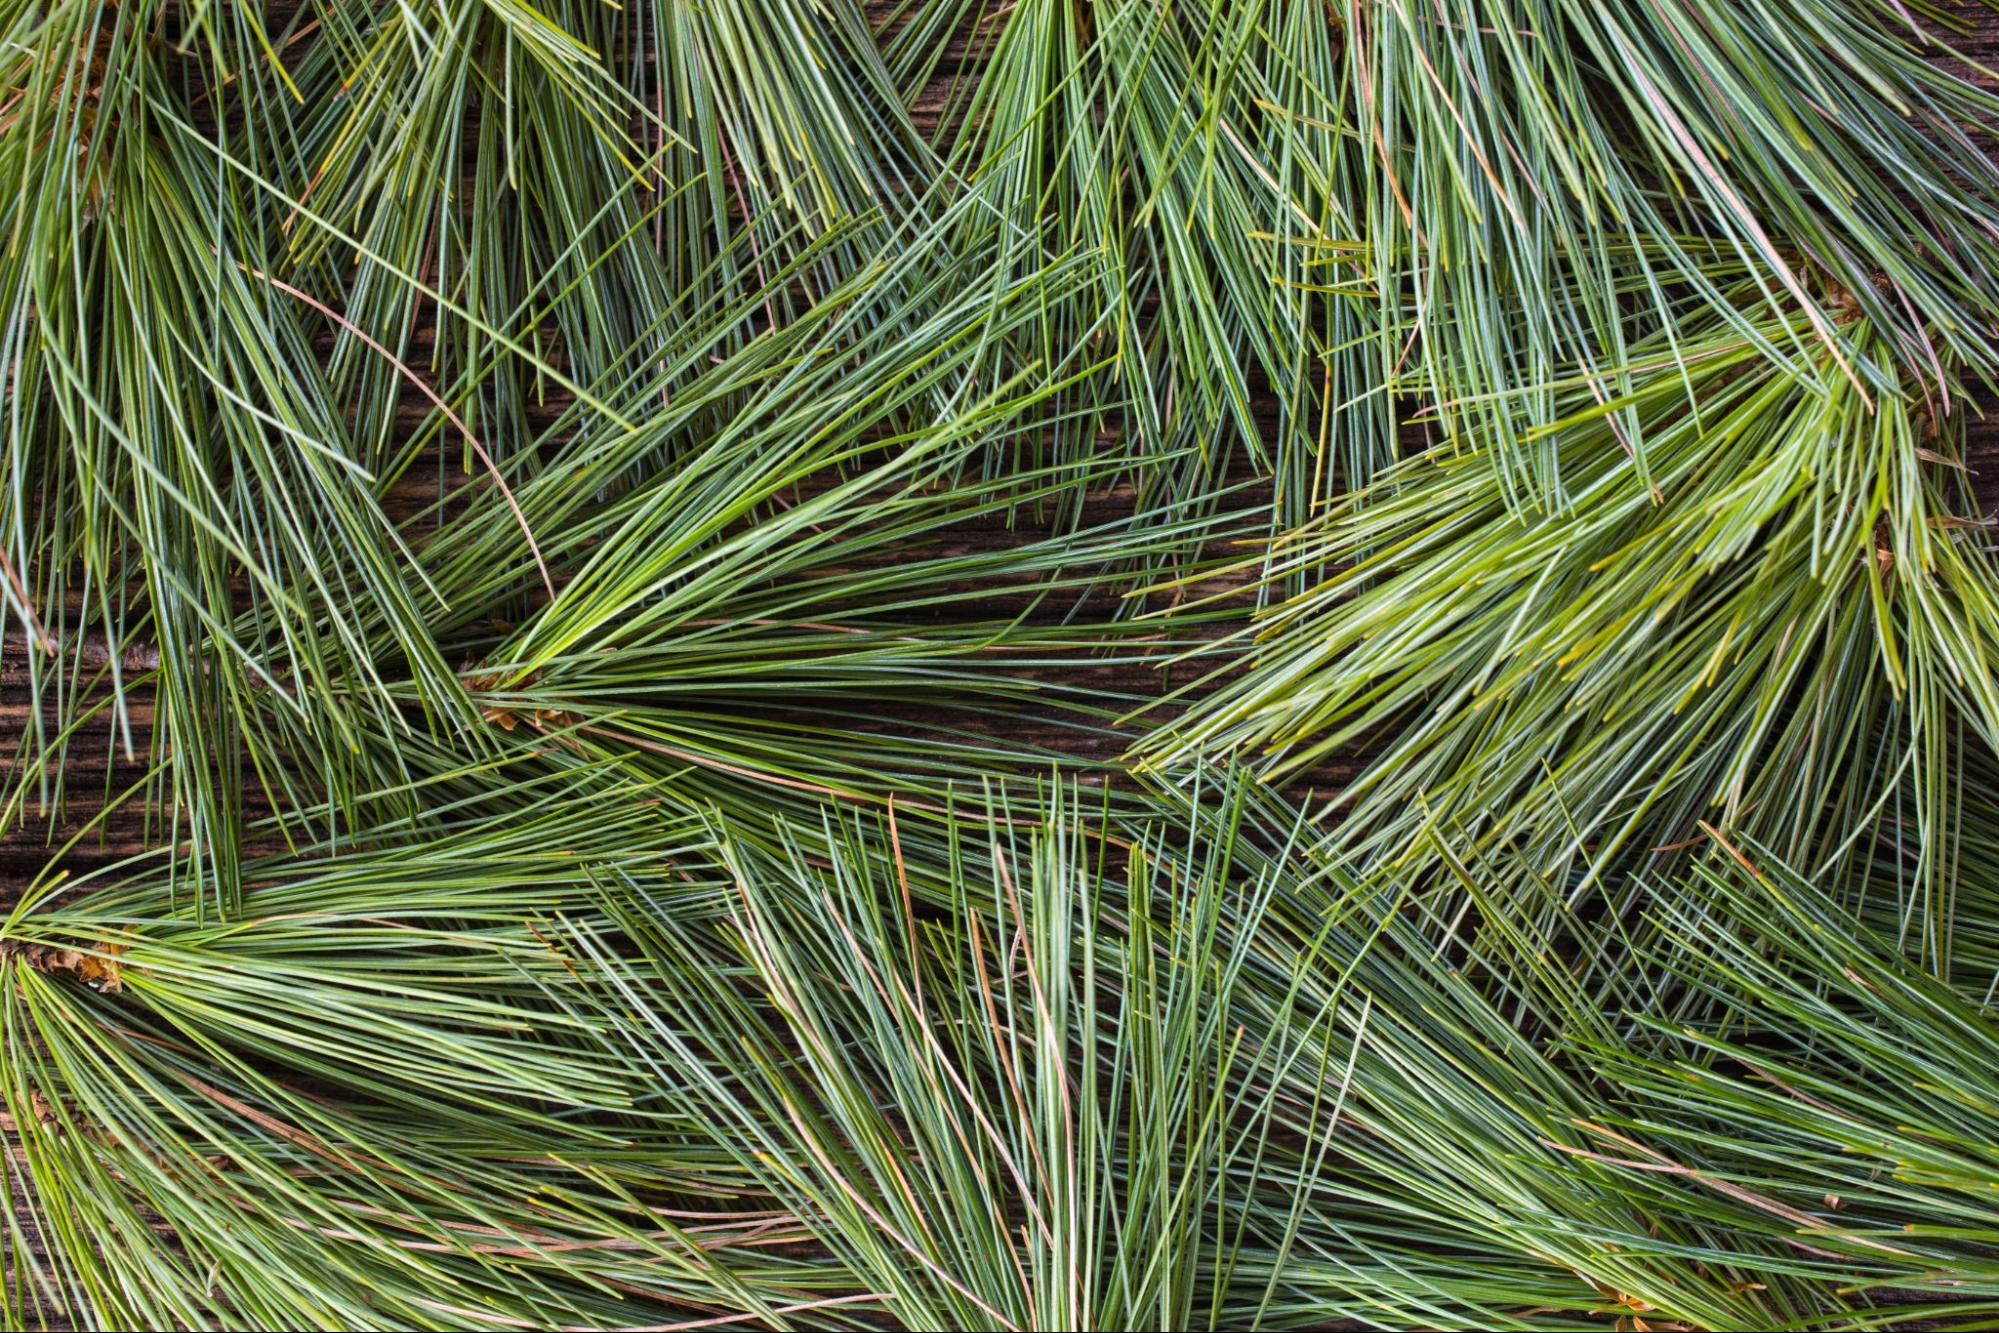 The white pine has long, fine needles